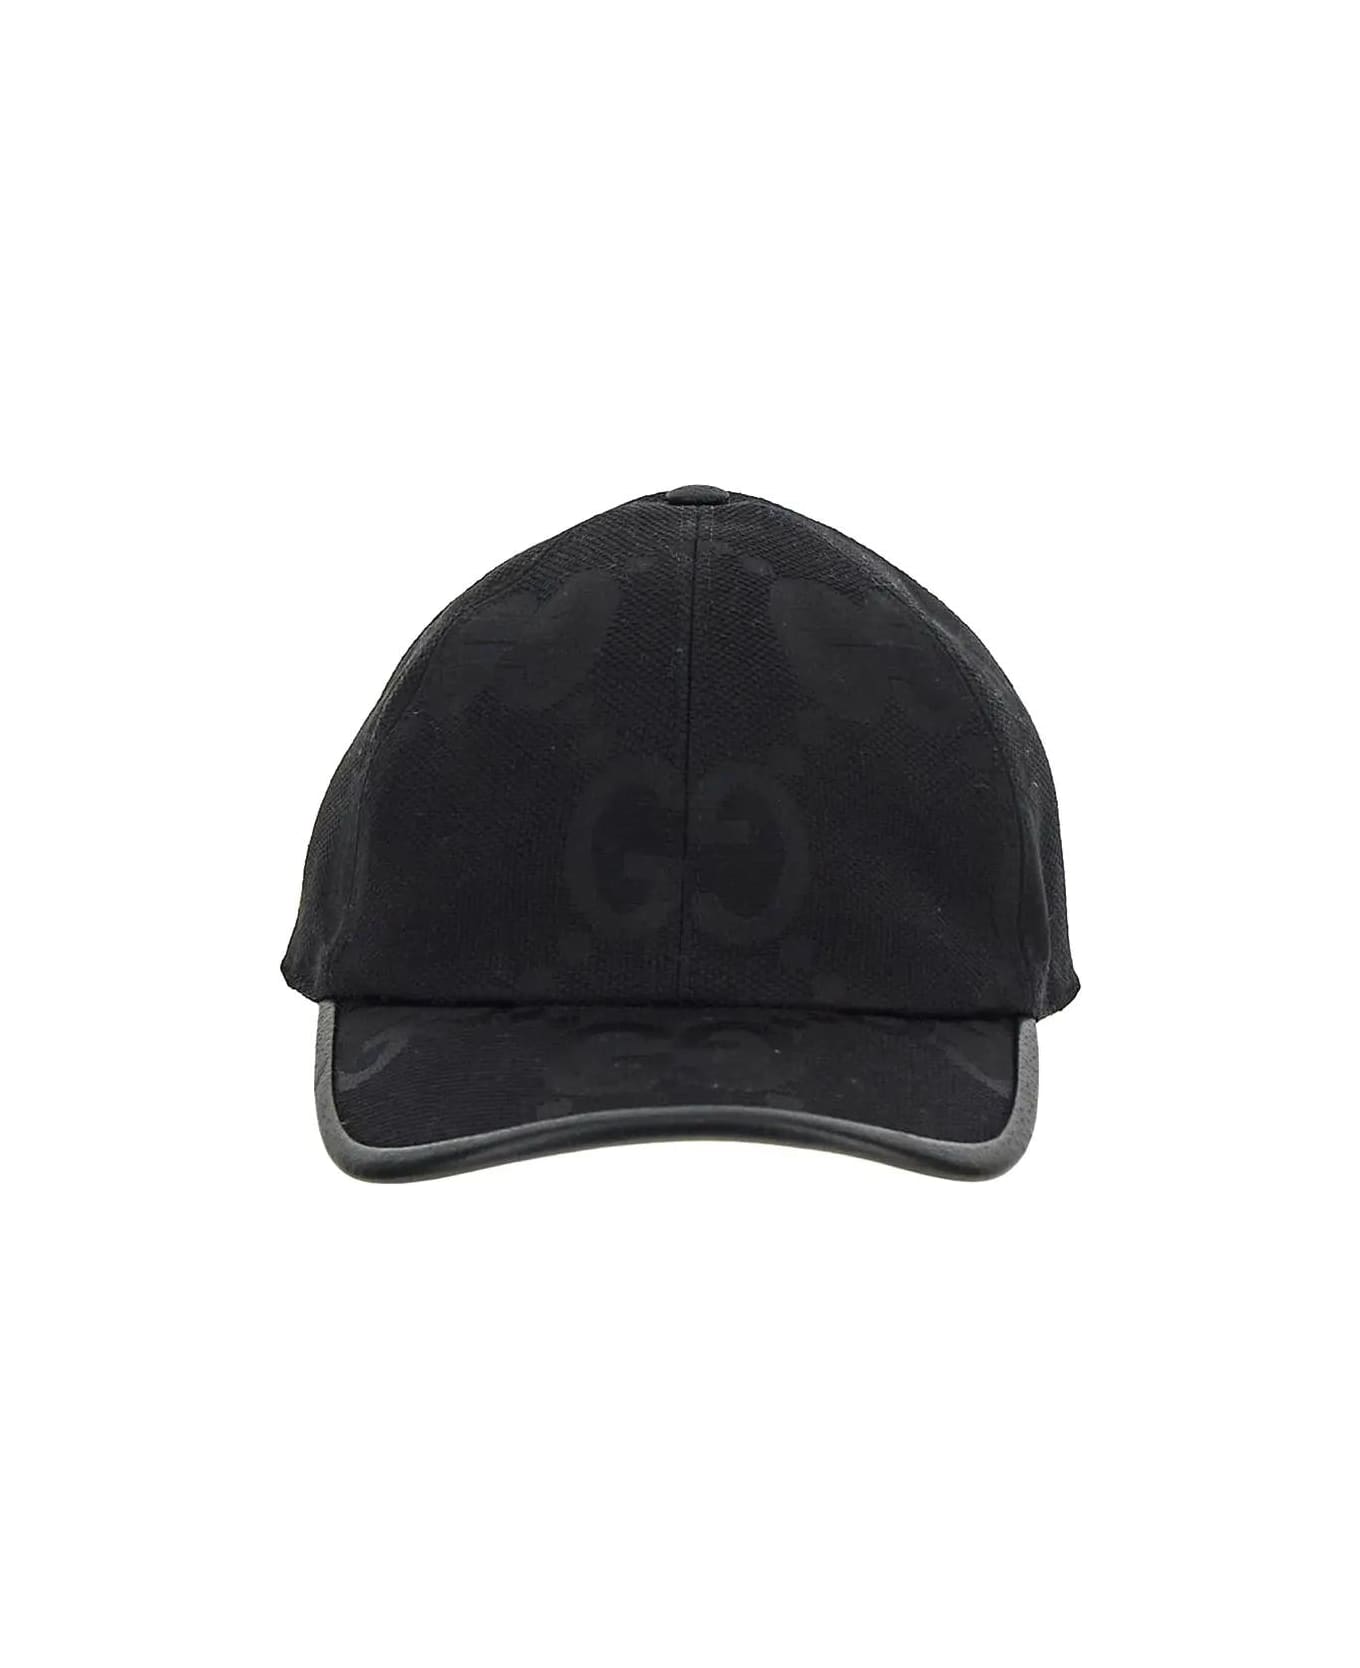 Gucci Gg Supreme Baseball Cap - Black